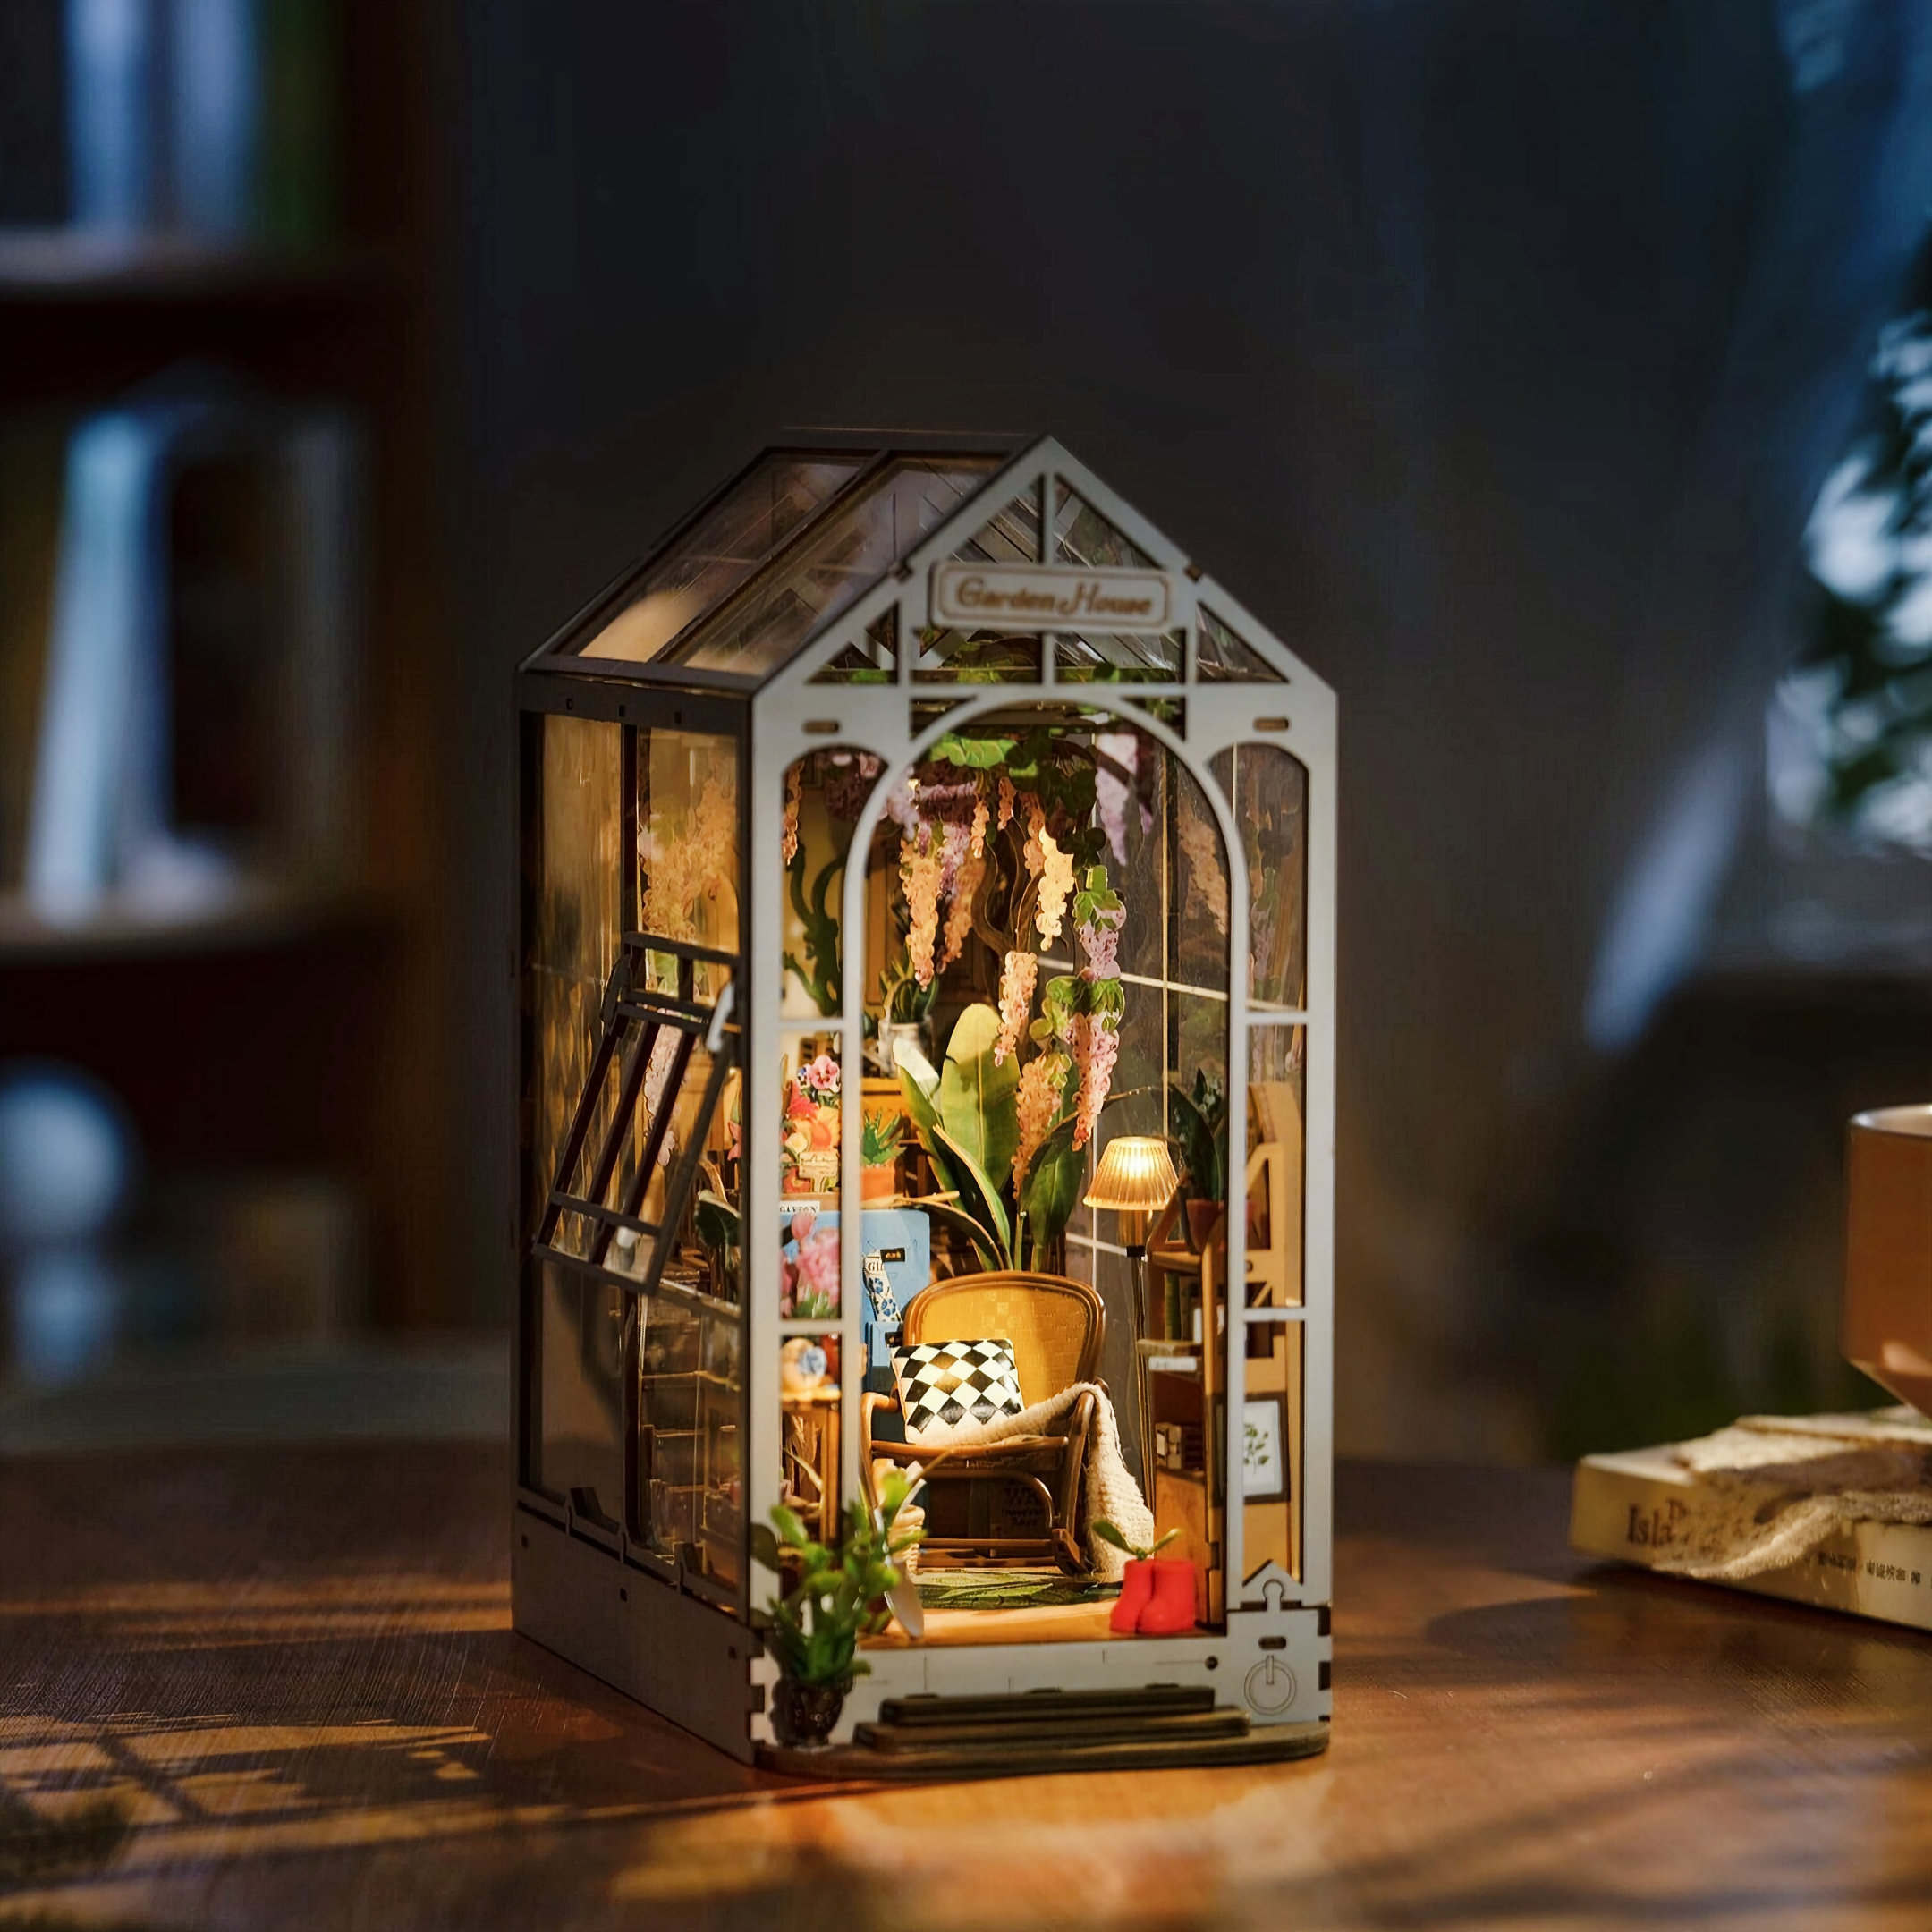 Magic Wand Shop DIY Miniature Dollhouse - CraftDIYKit